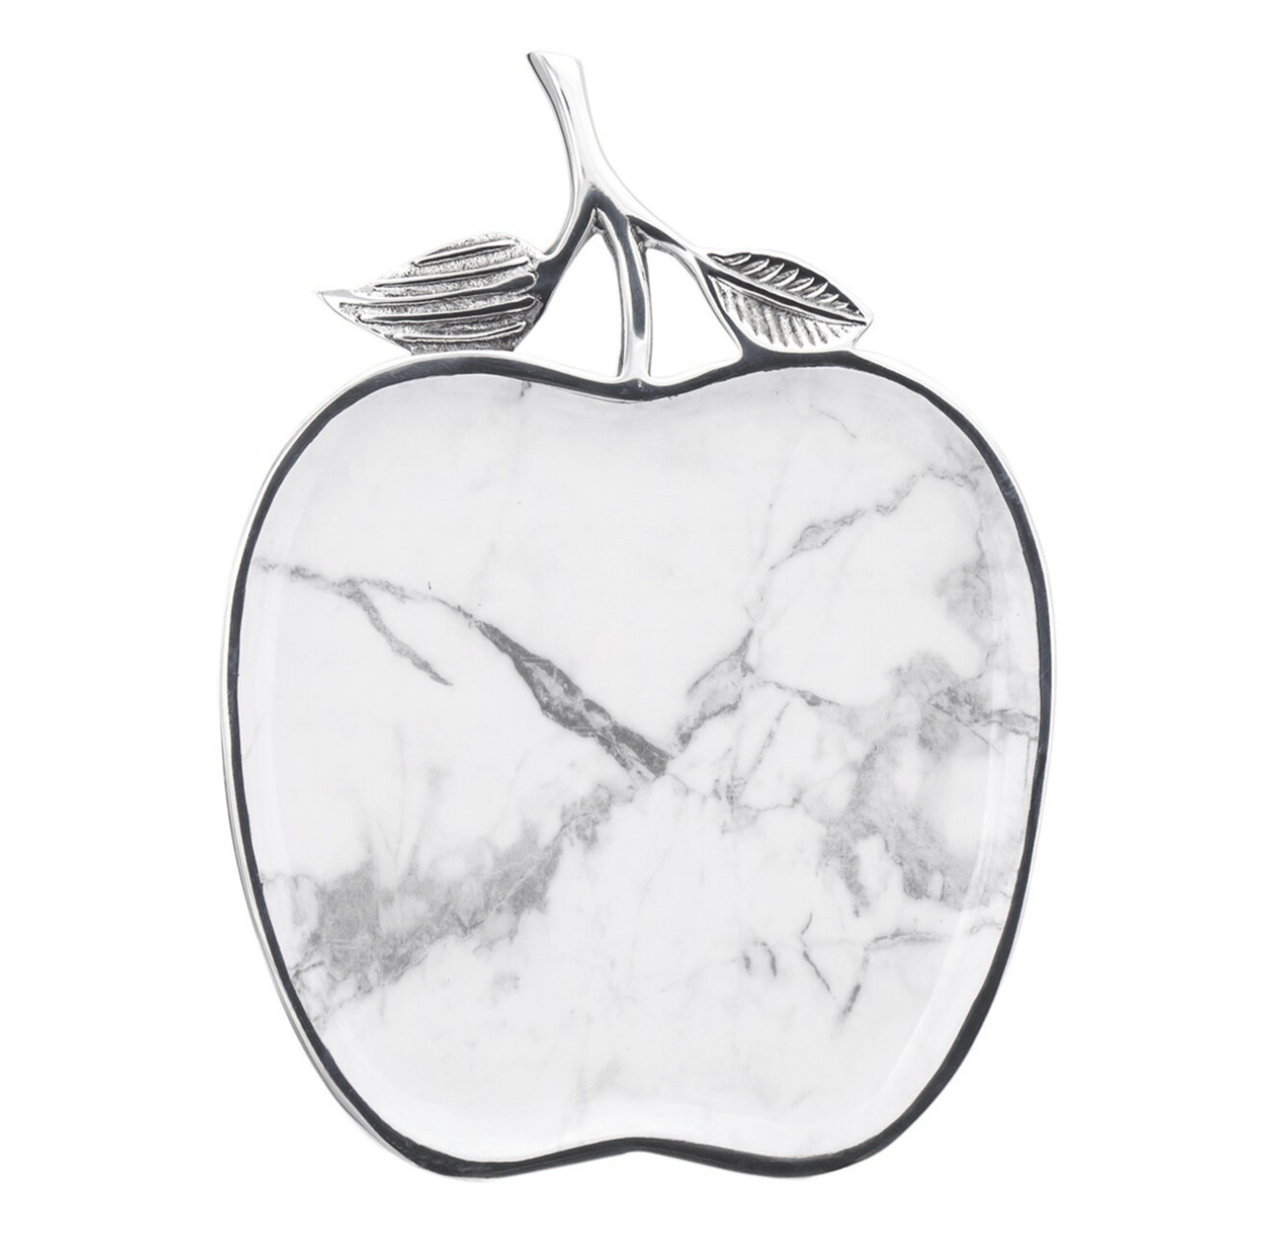 Godinger Apple Dishes White Marble Apple Tray